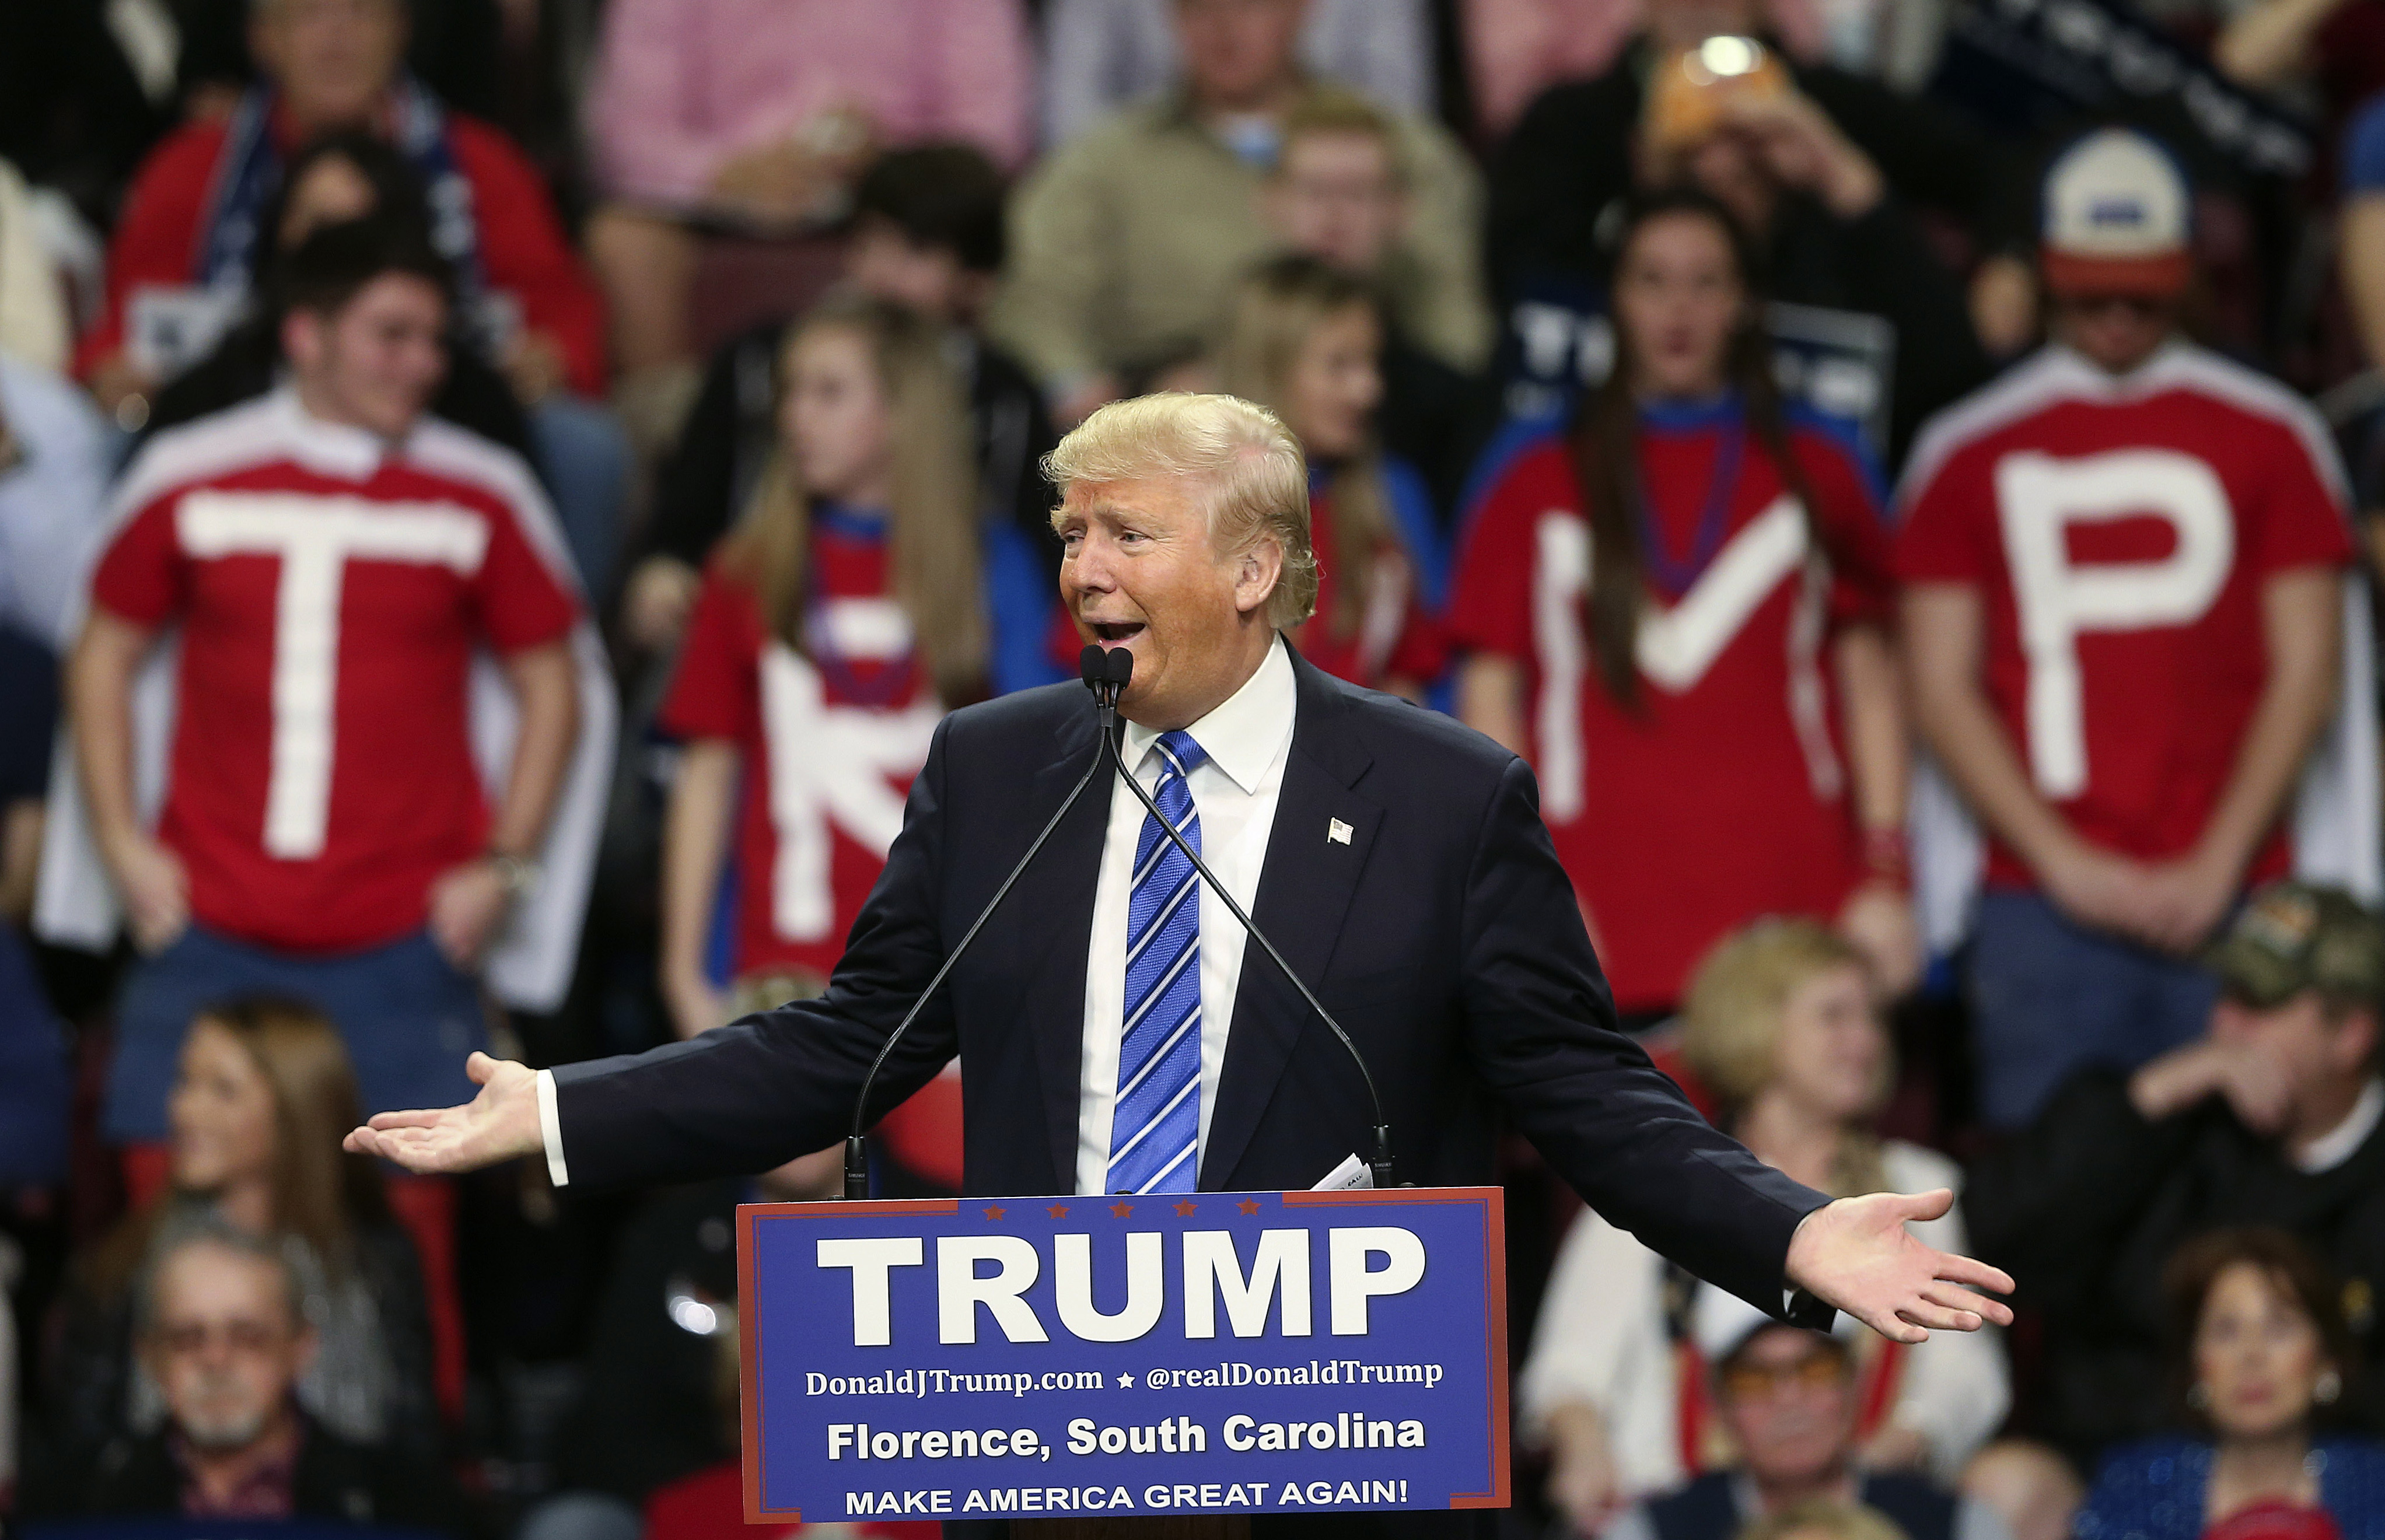 Donald Trump campaigns in South Carolina.